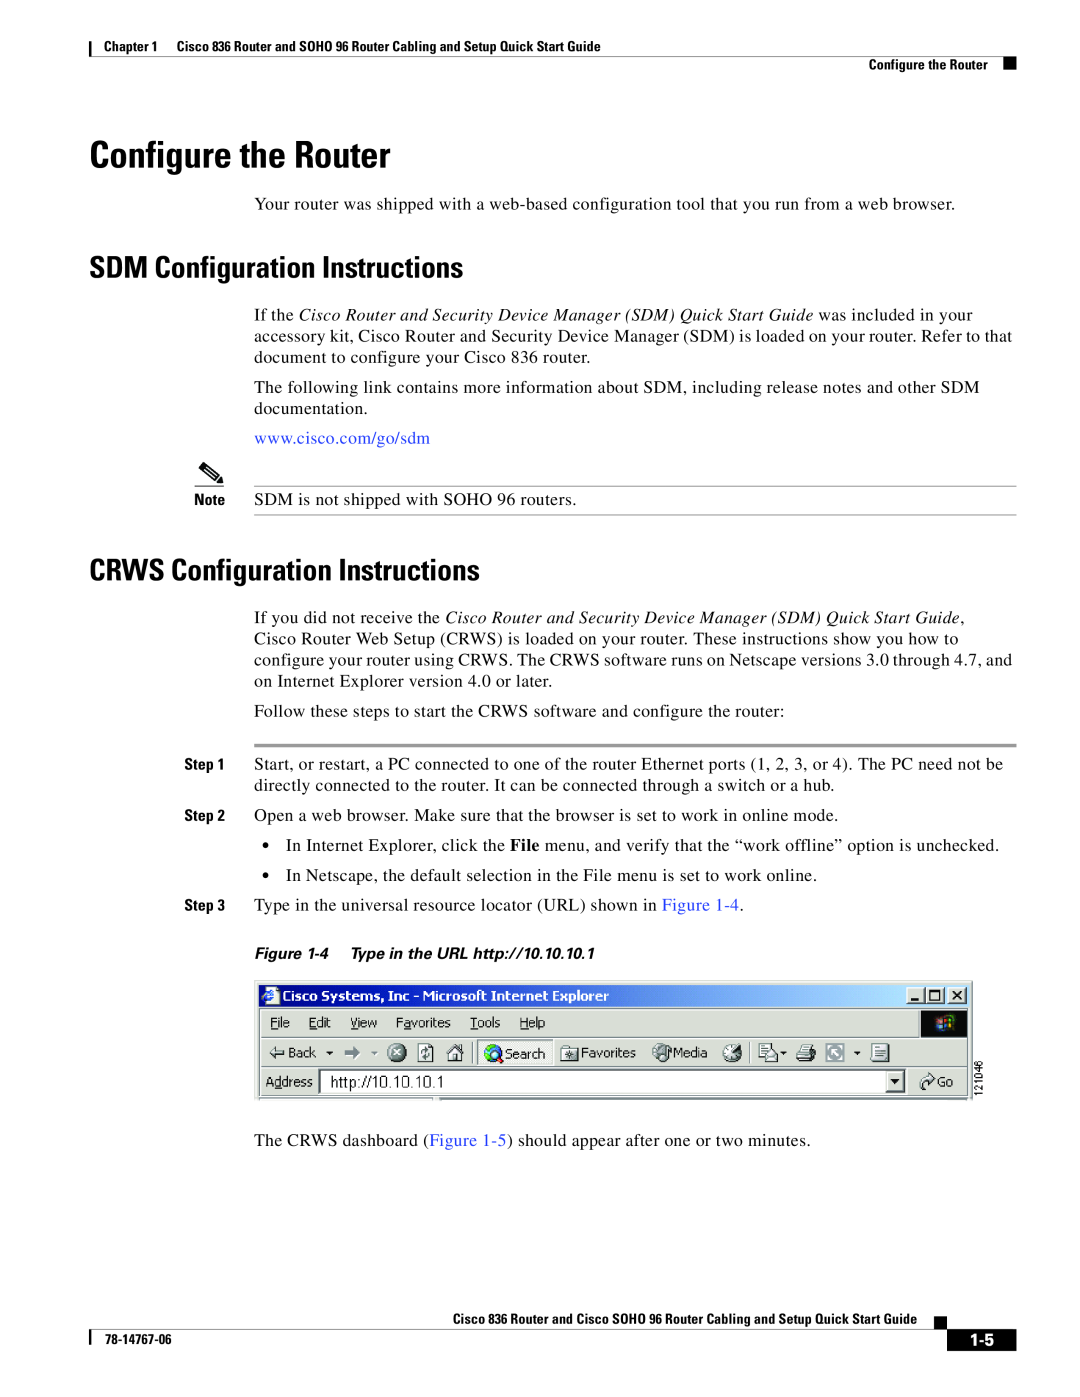 Cisco Systems SOHO 96 quick start Configure the Router, SDM Configuration Instructions, CRWS Configuration Instructions 